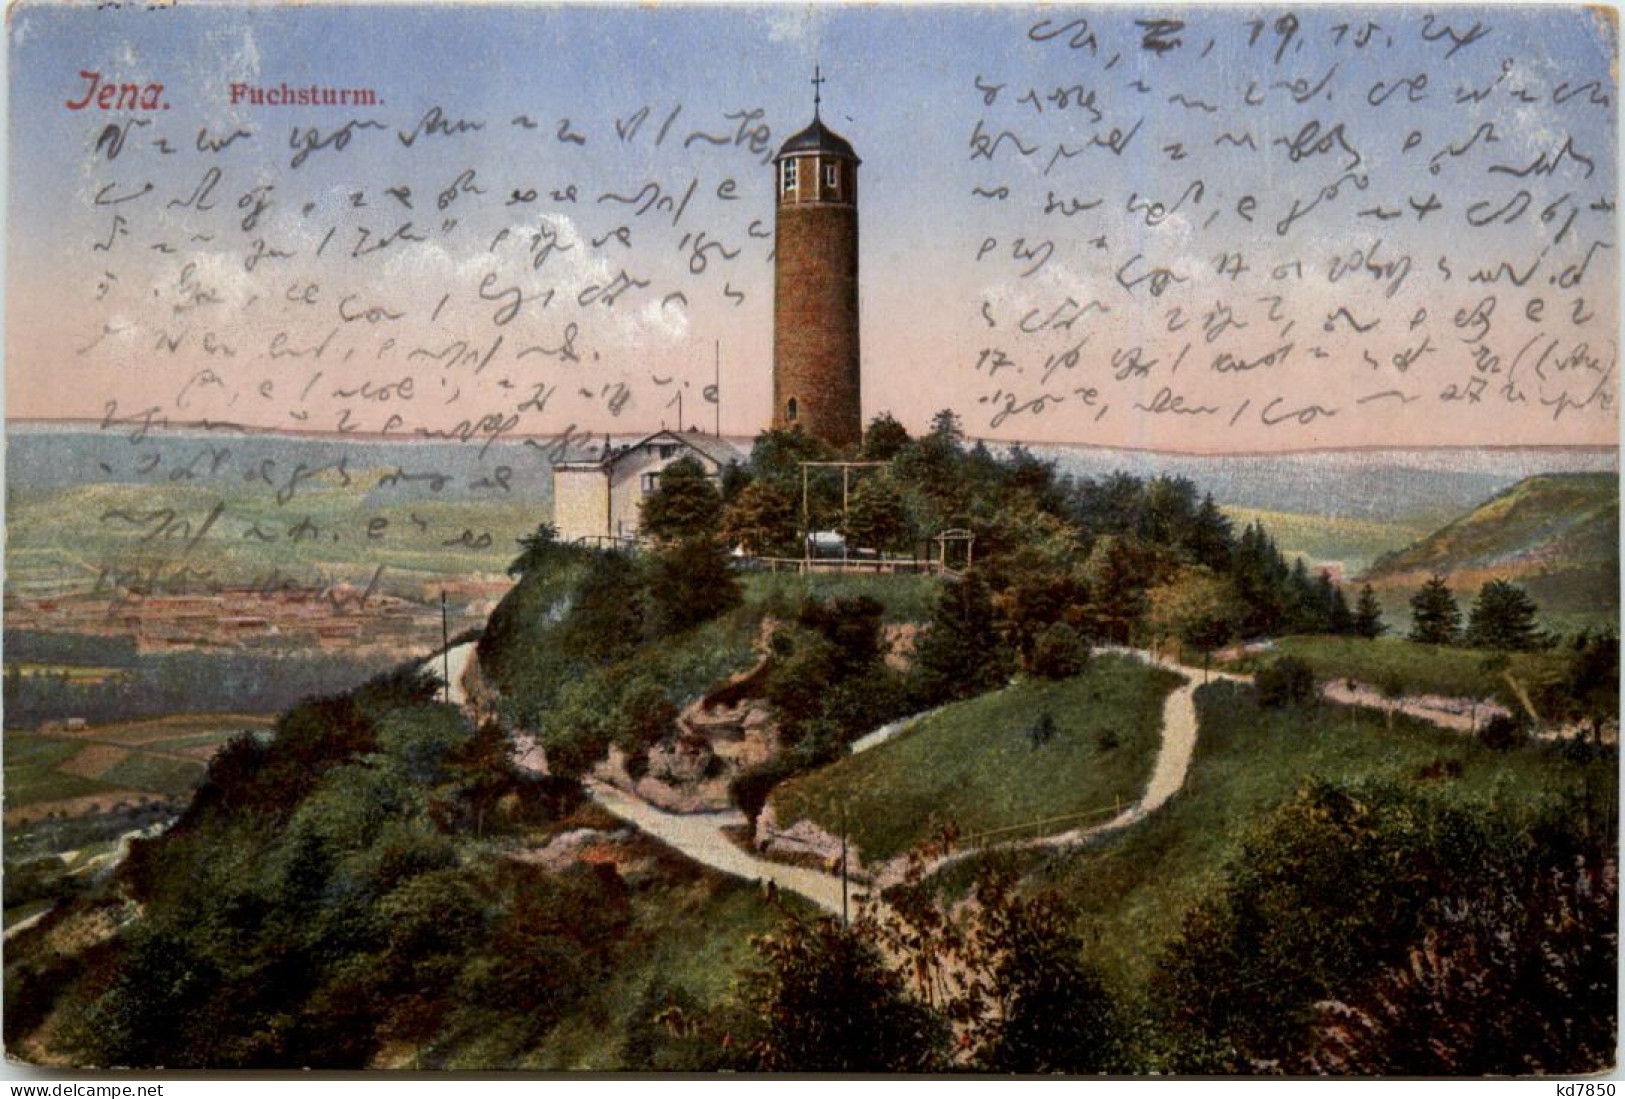 Jena, Fuchsturm - Jena